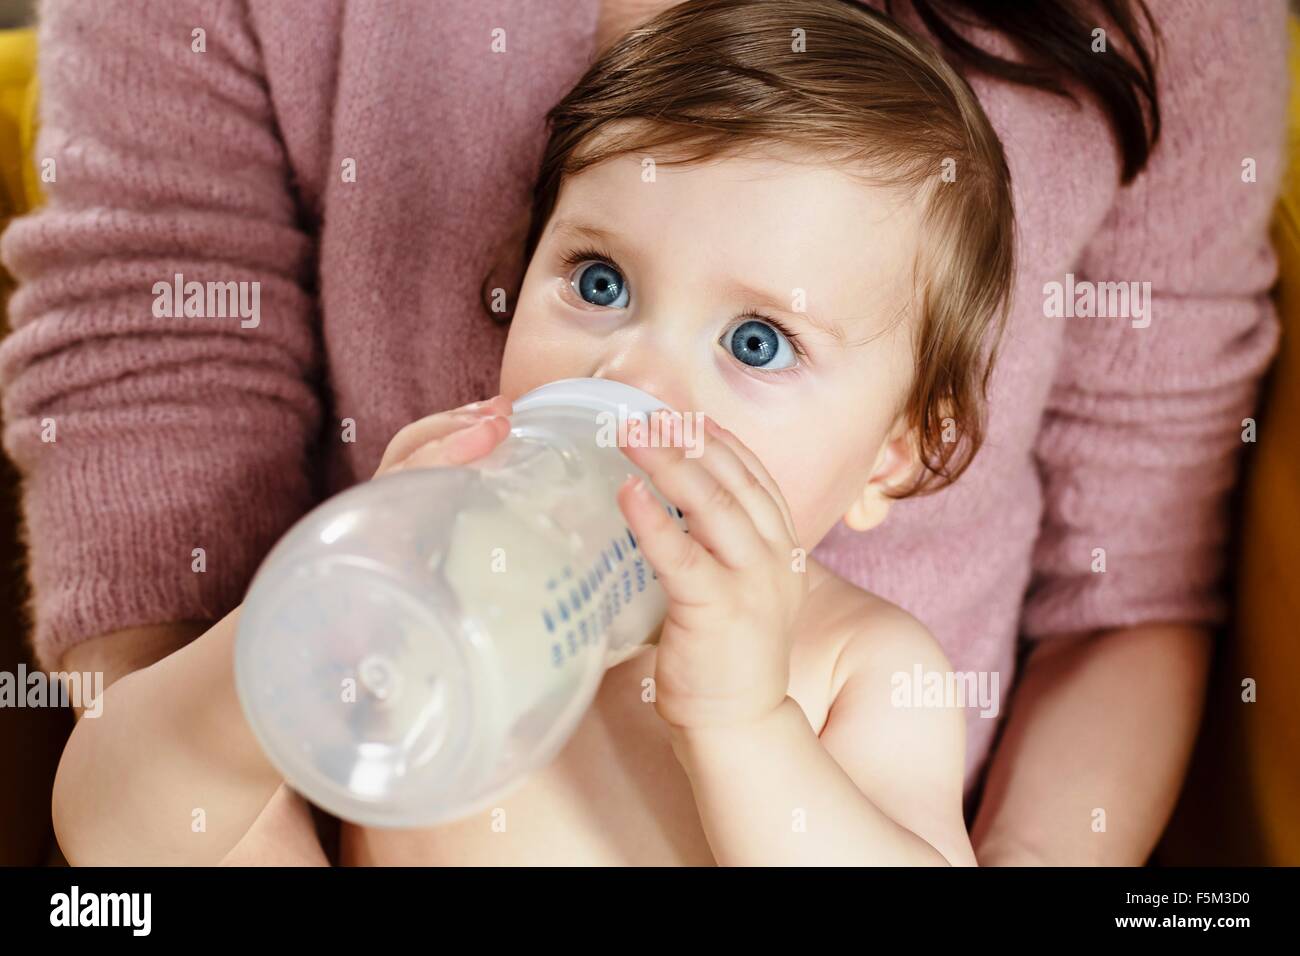 Baby boy drinking milk from bottle Stock Photo